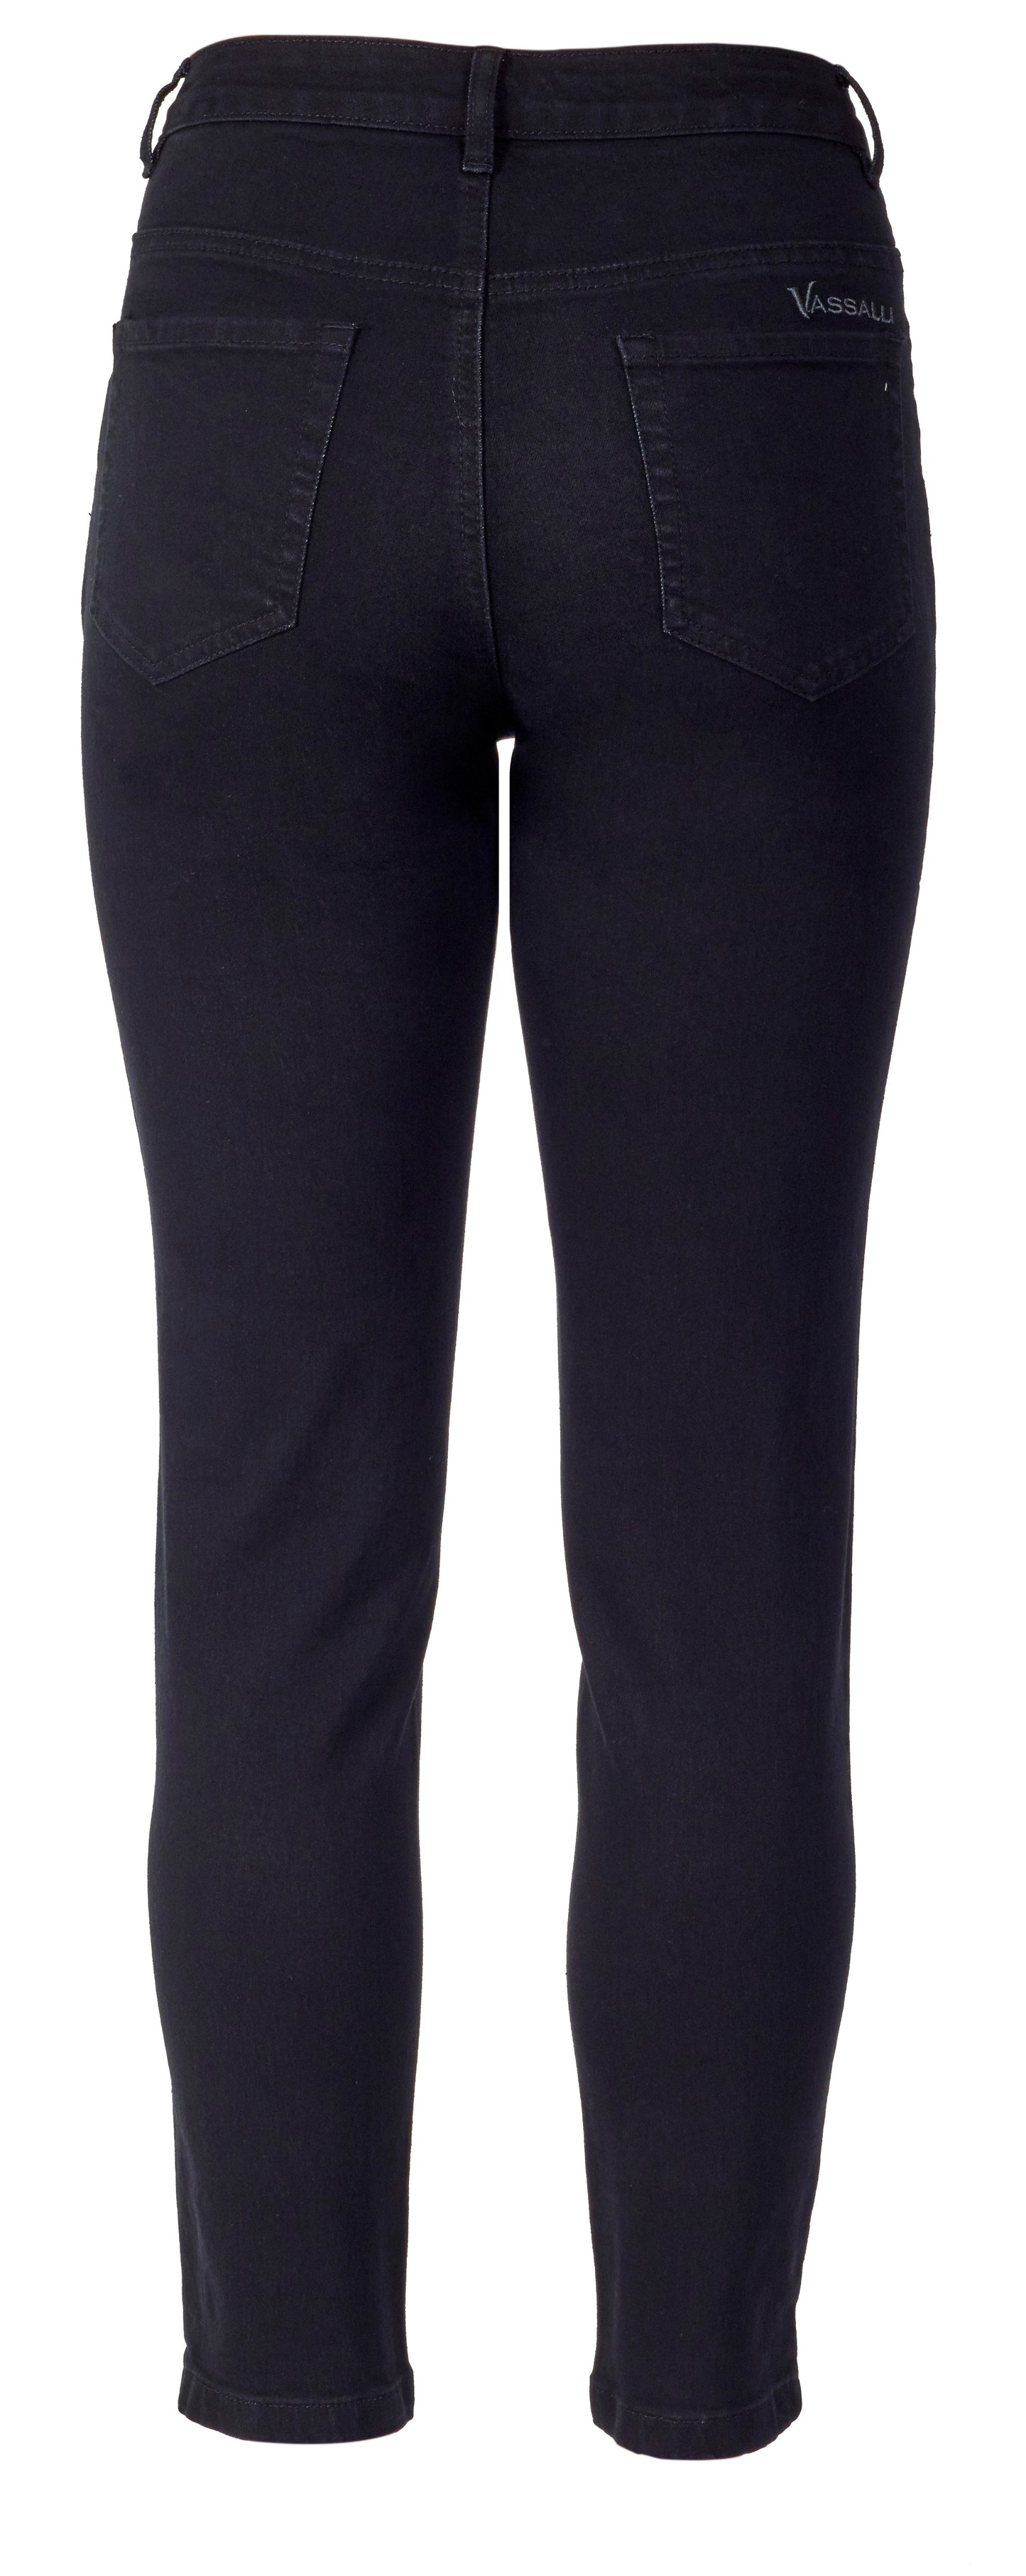 Vassalli - Pant - Style 5744 - Ankle Grazer Black - Stock available please enquire